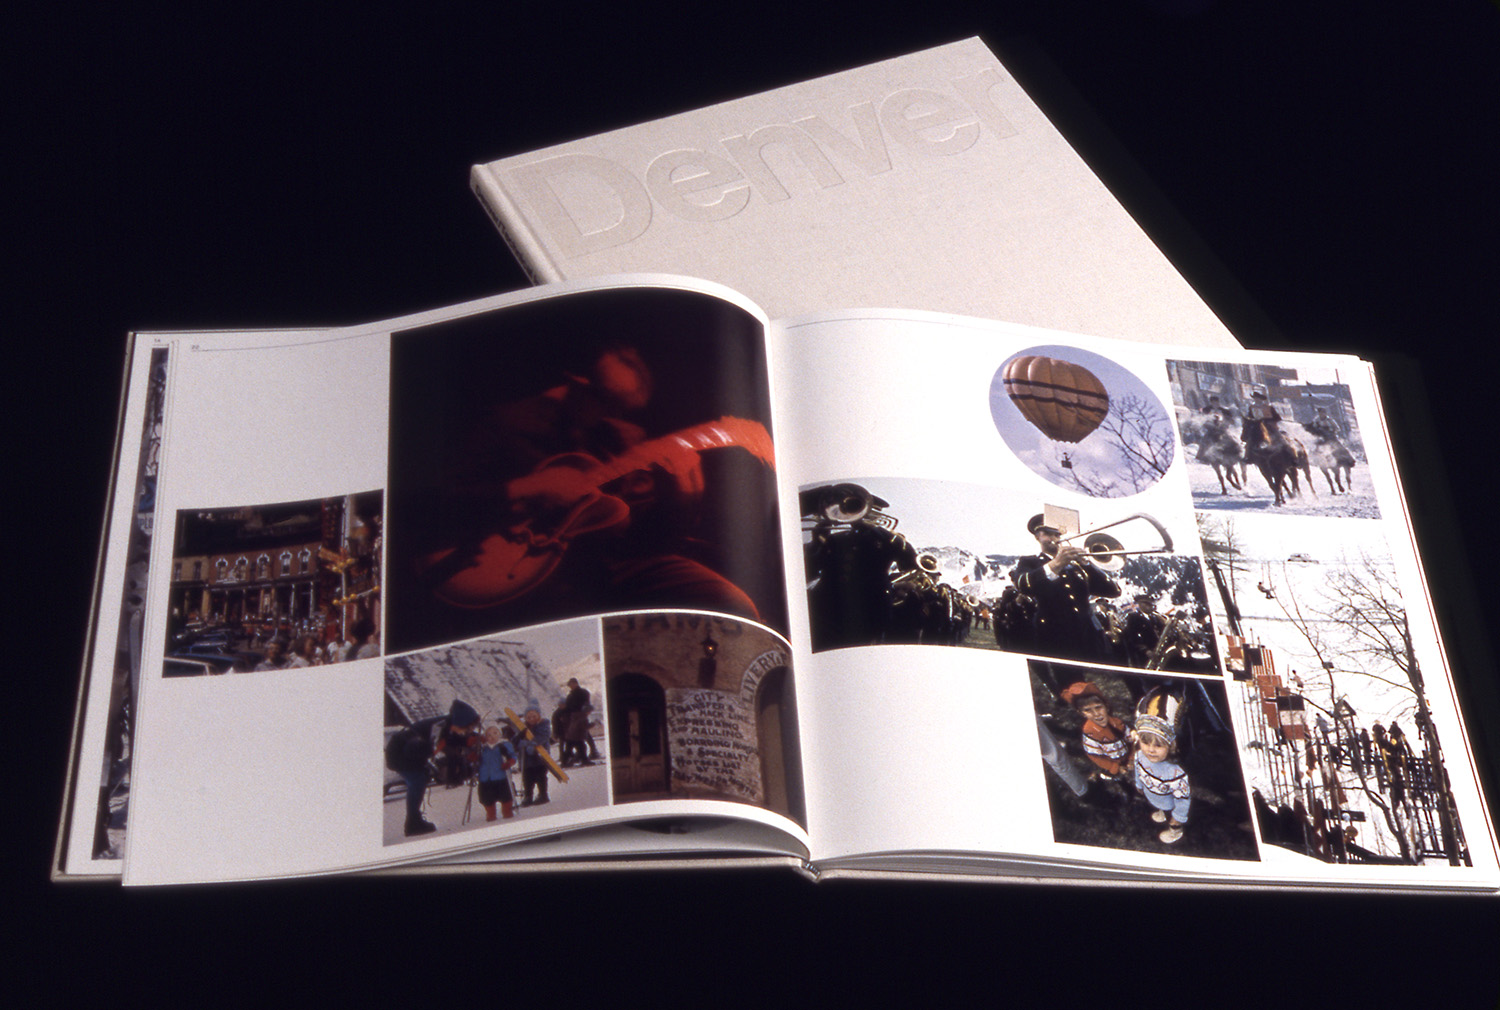 Denver 76 Olympic bid books spread